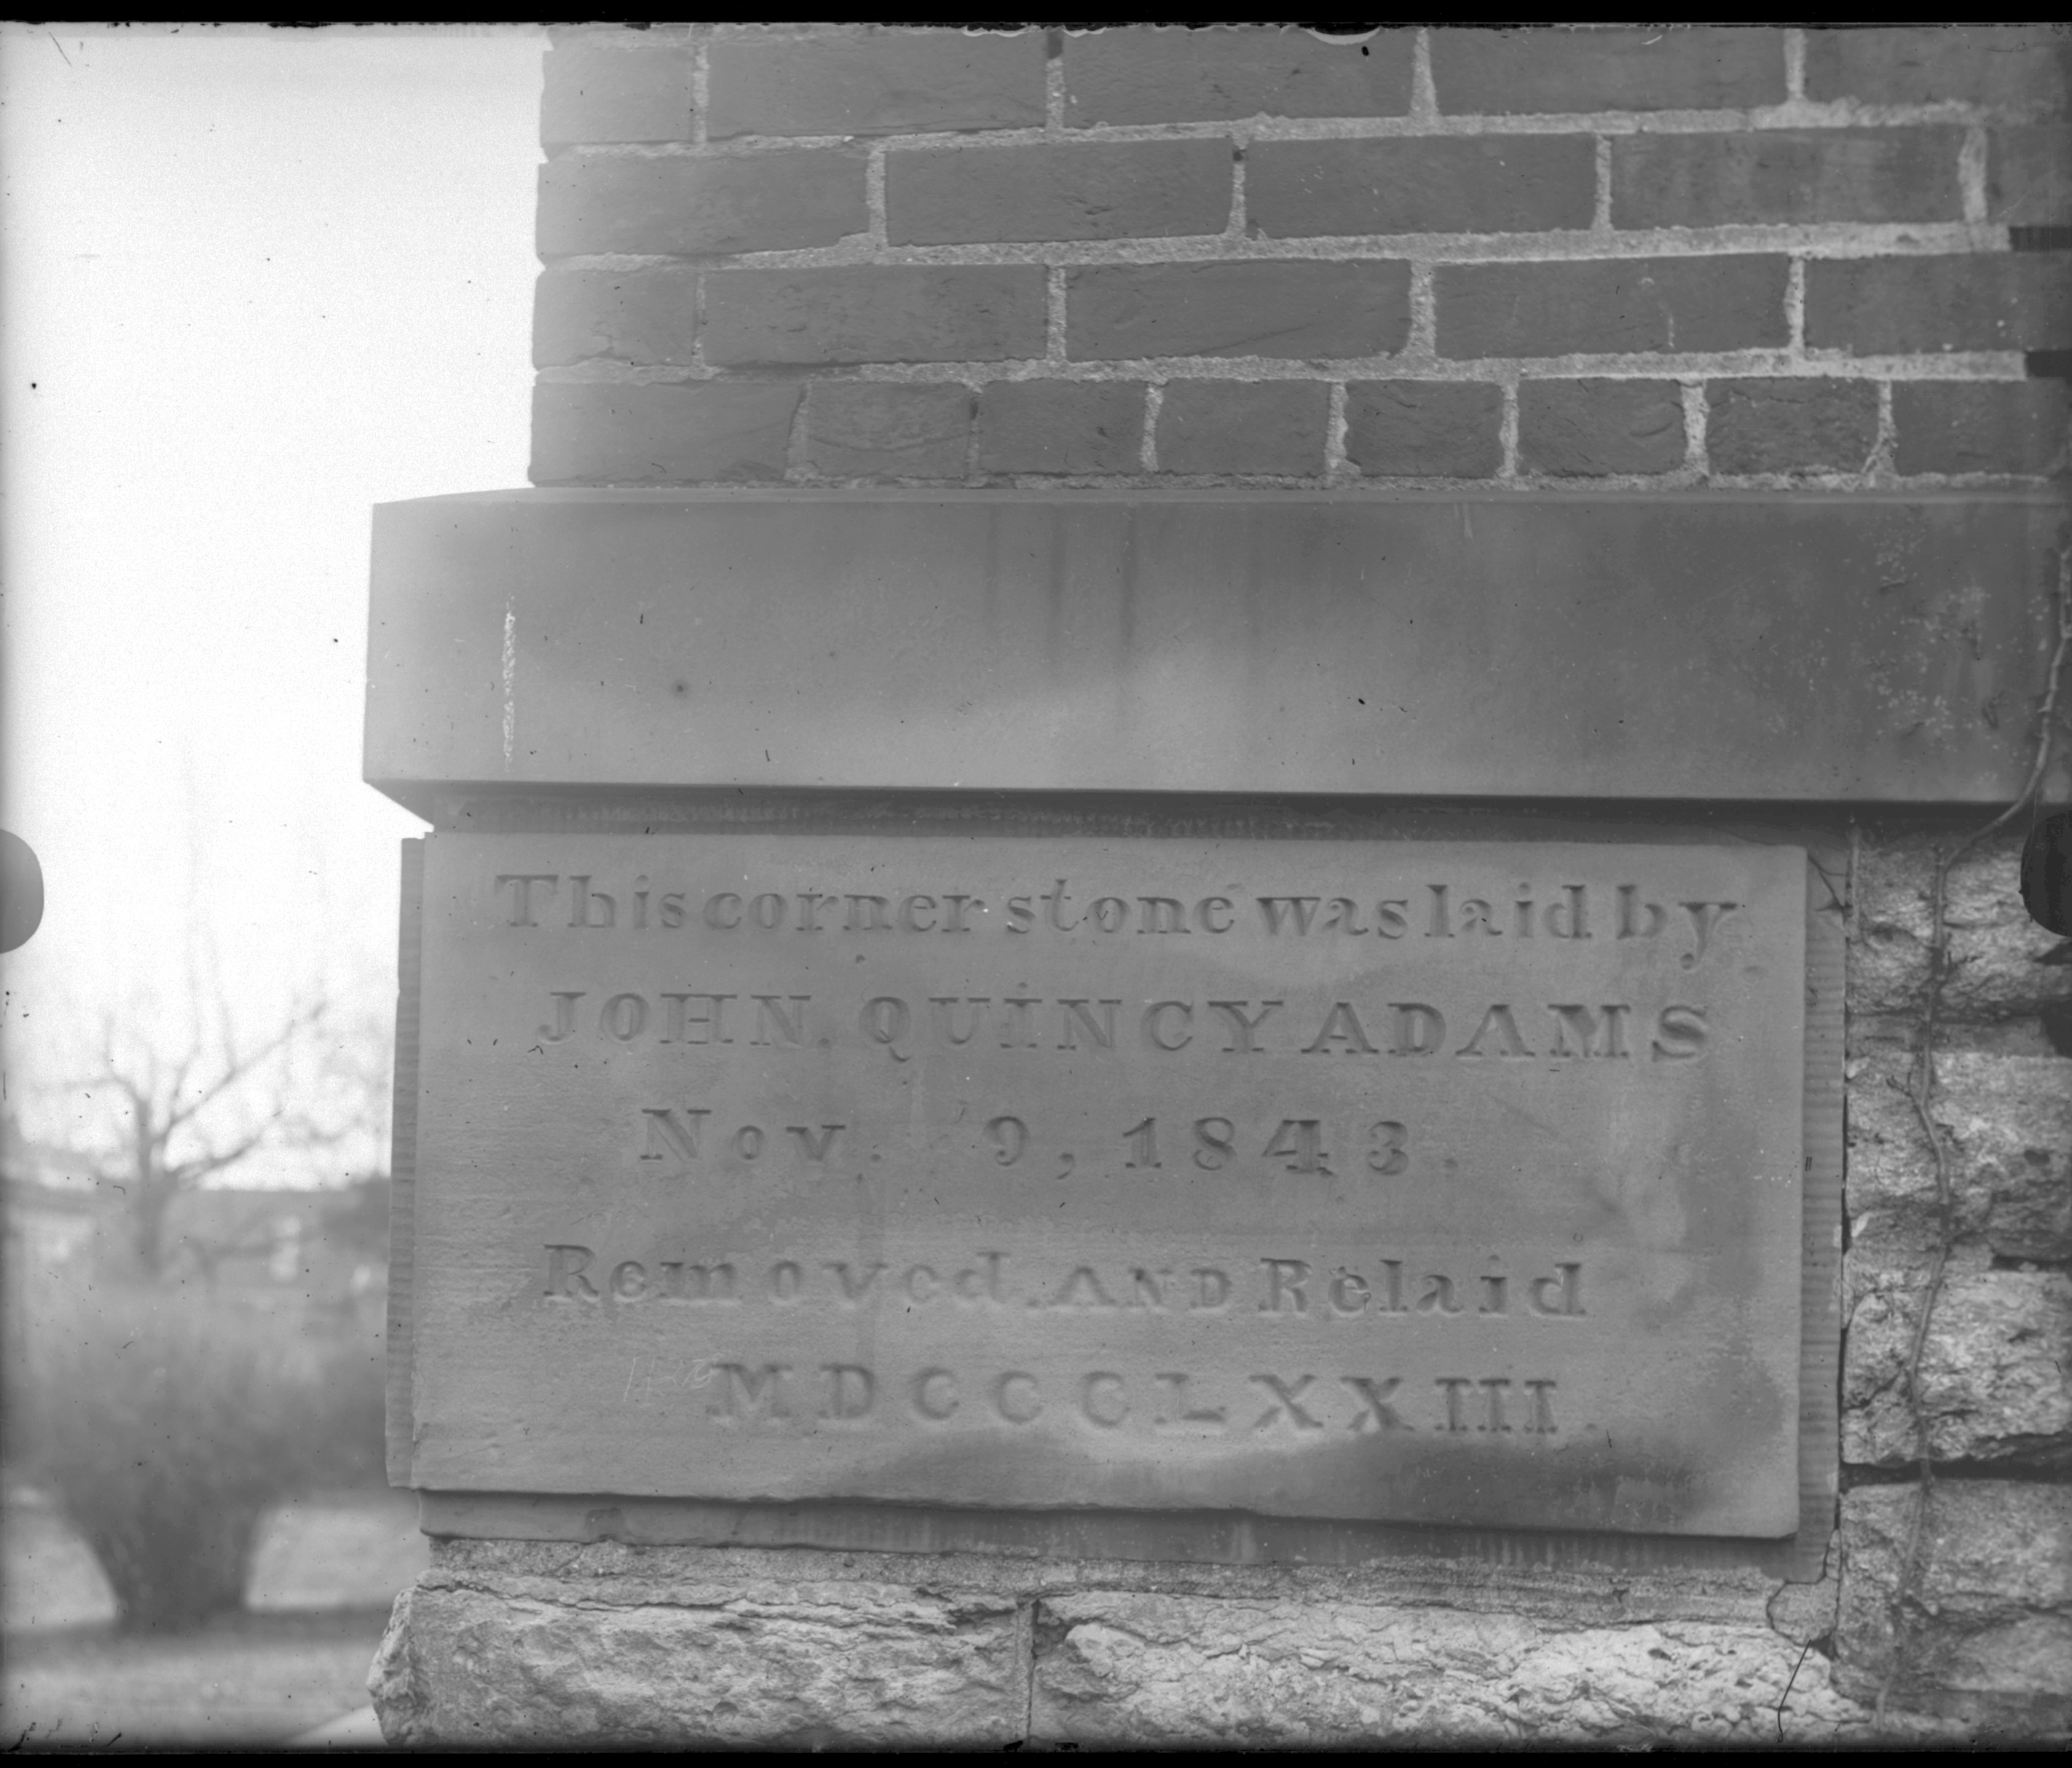 Photo of corner stone laid by John Quincy Adams for the original Cincinnati Observatory.